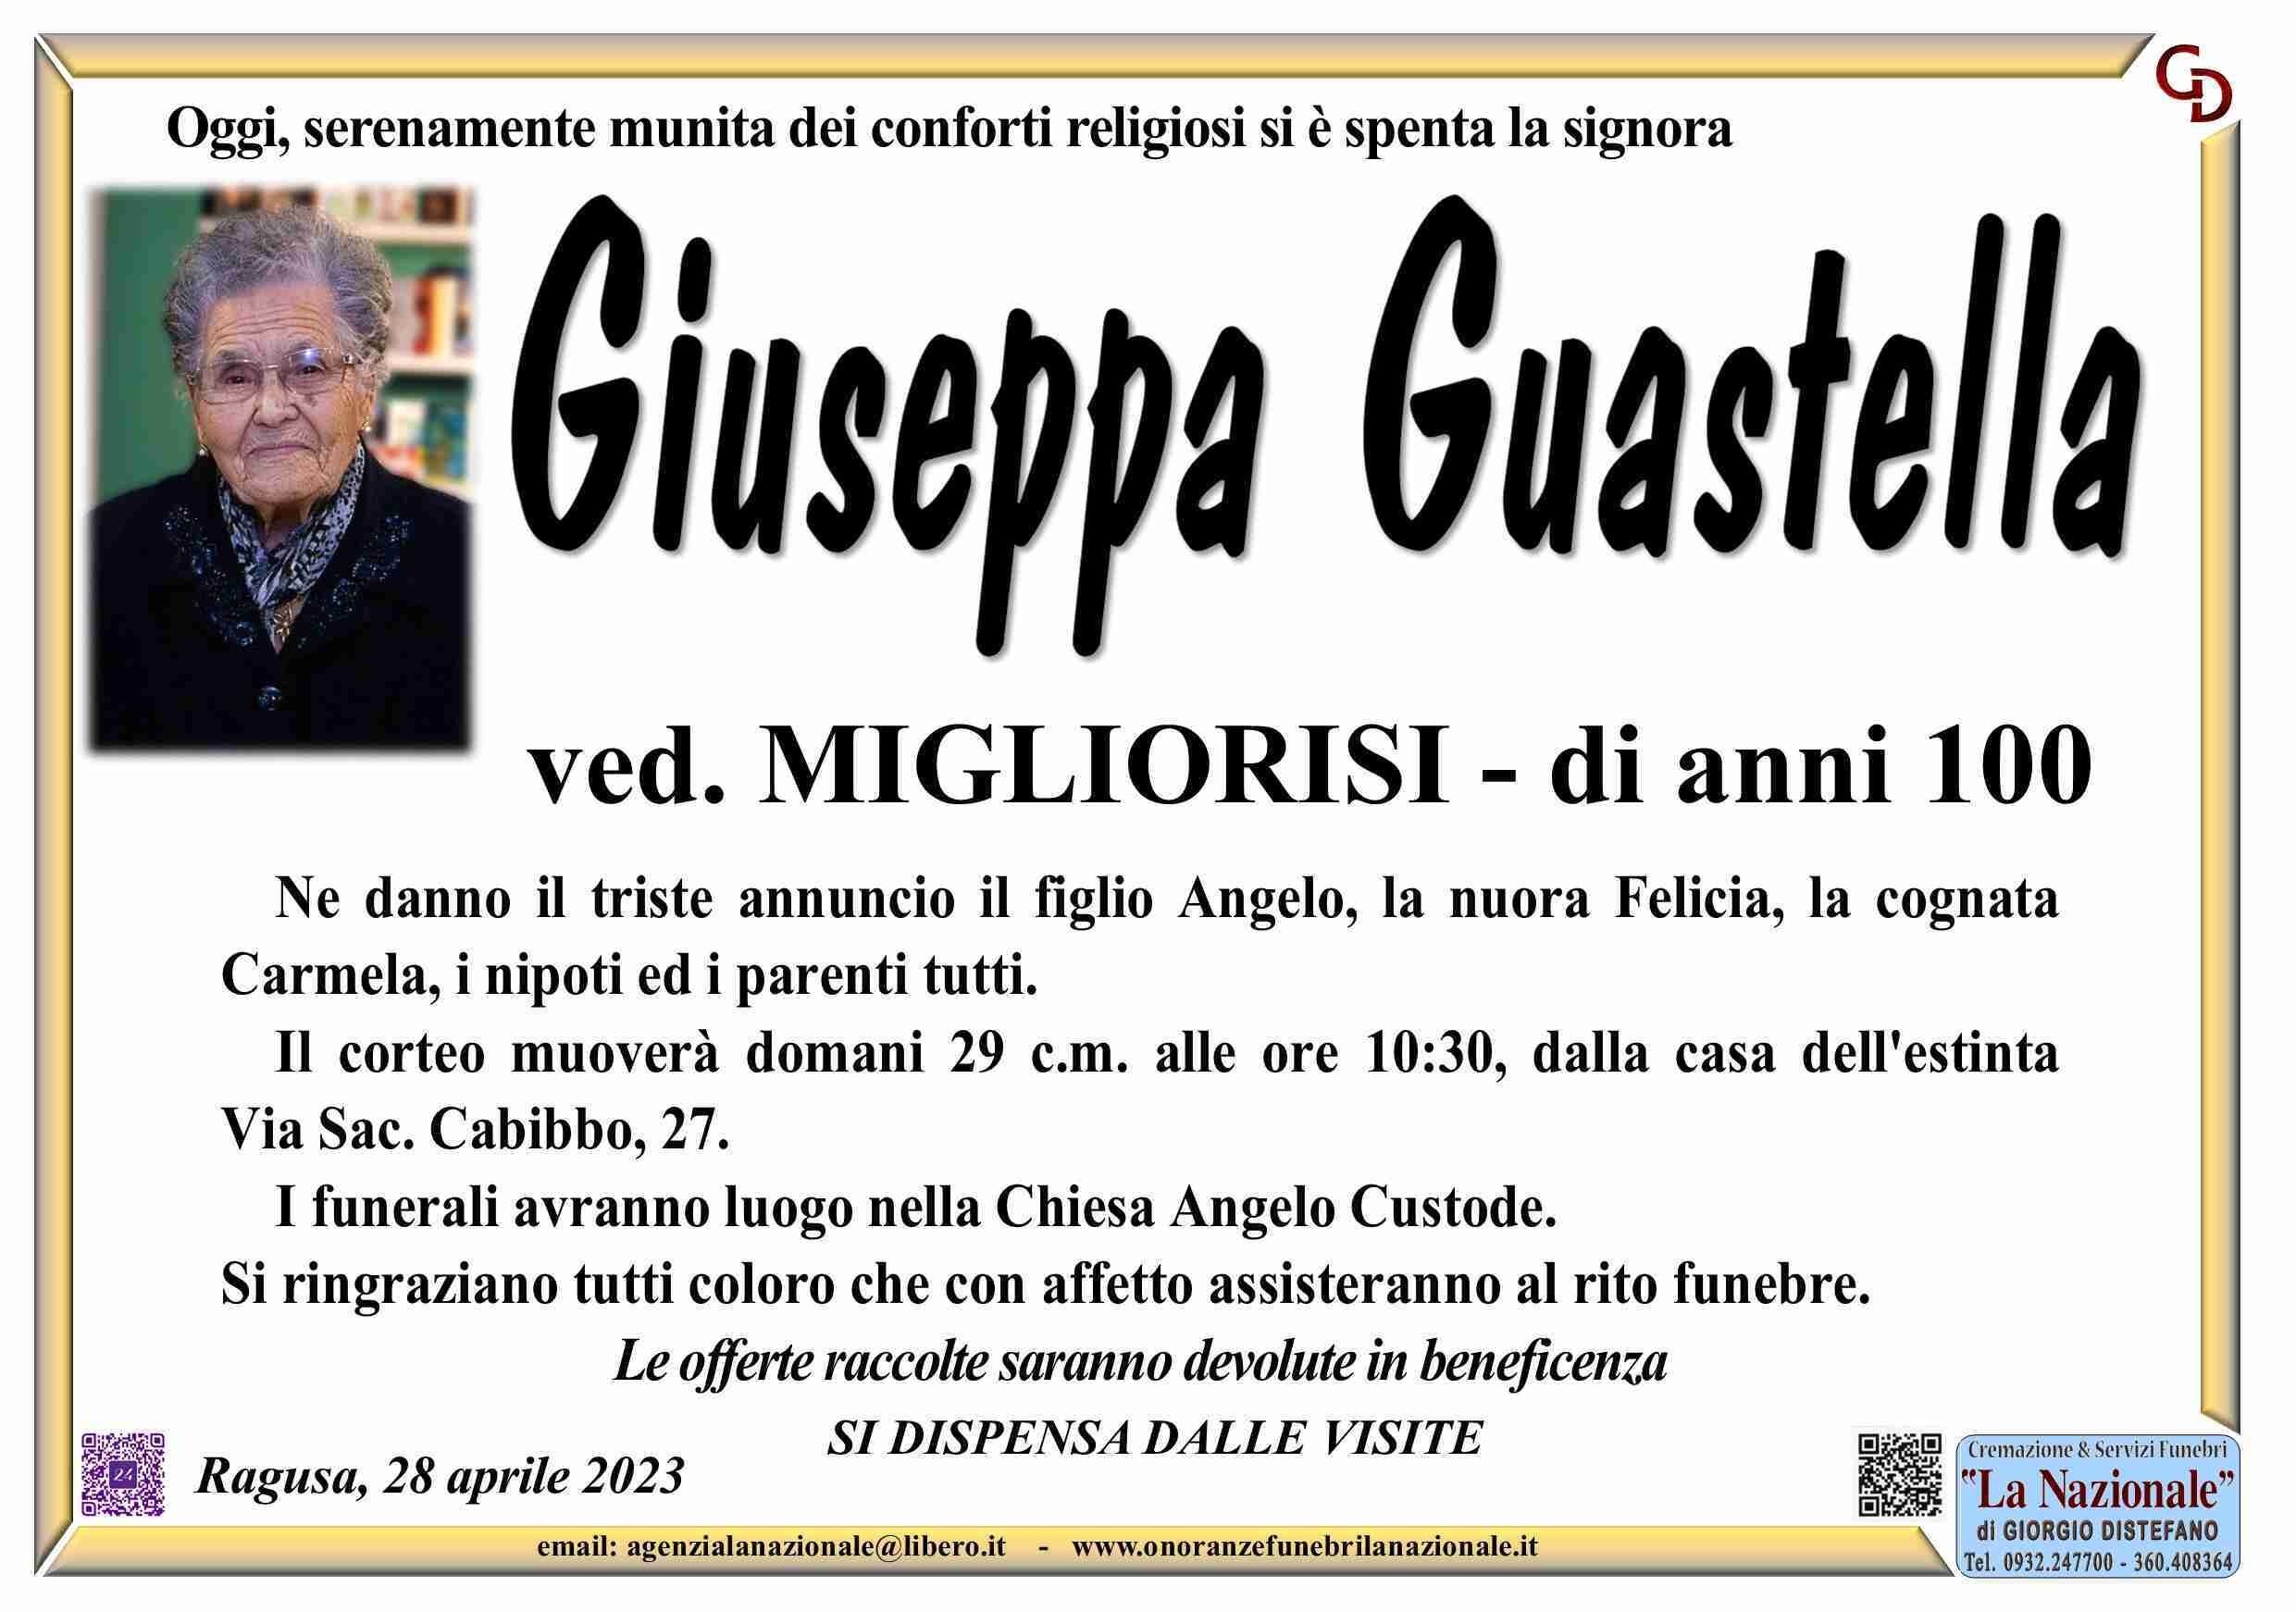 Giuseppa Guastella